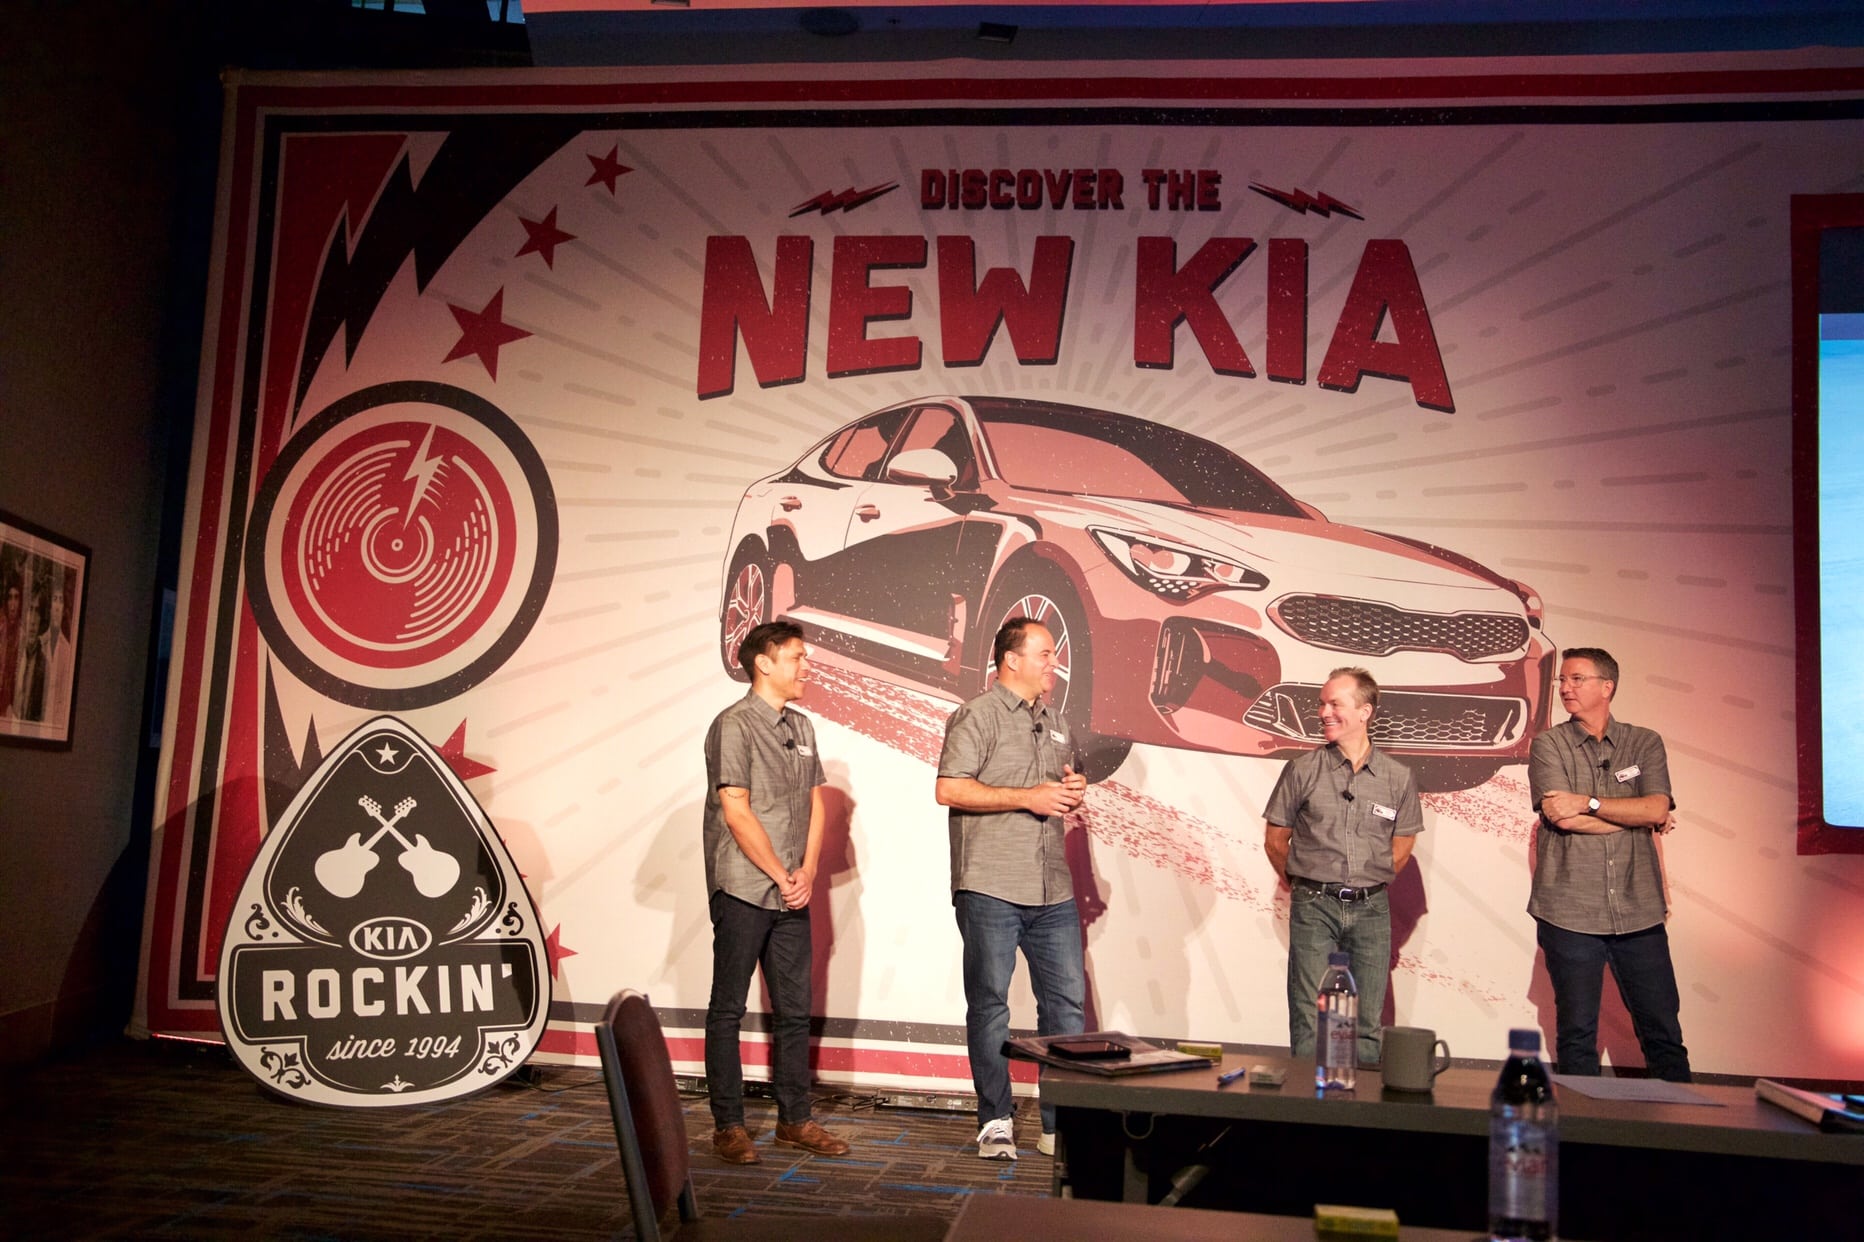 The Kia Team Sharing About the Kia Brand